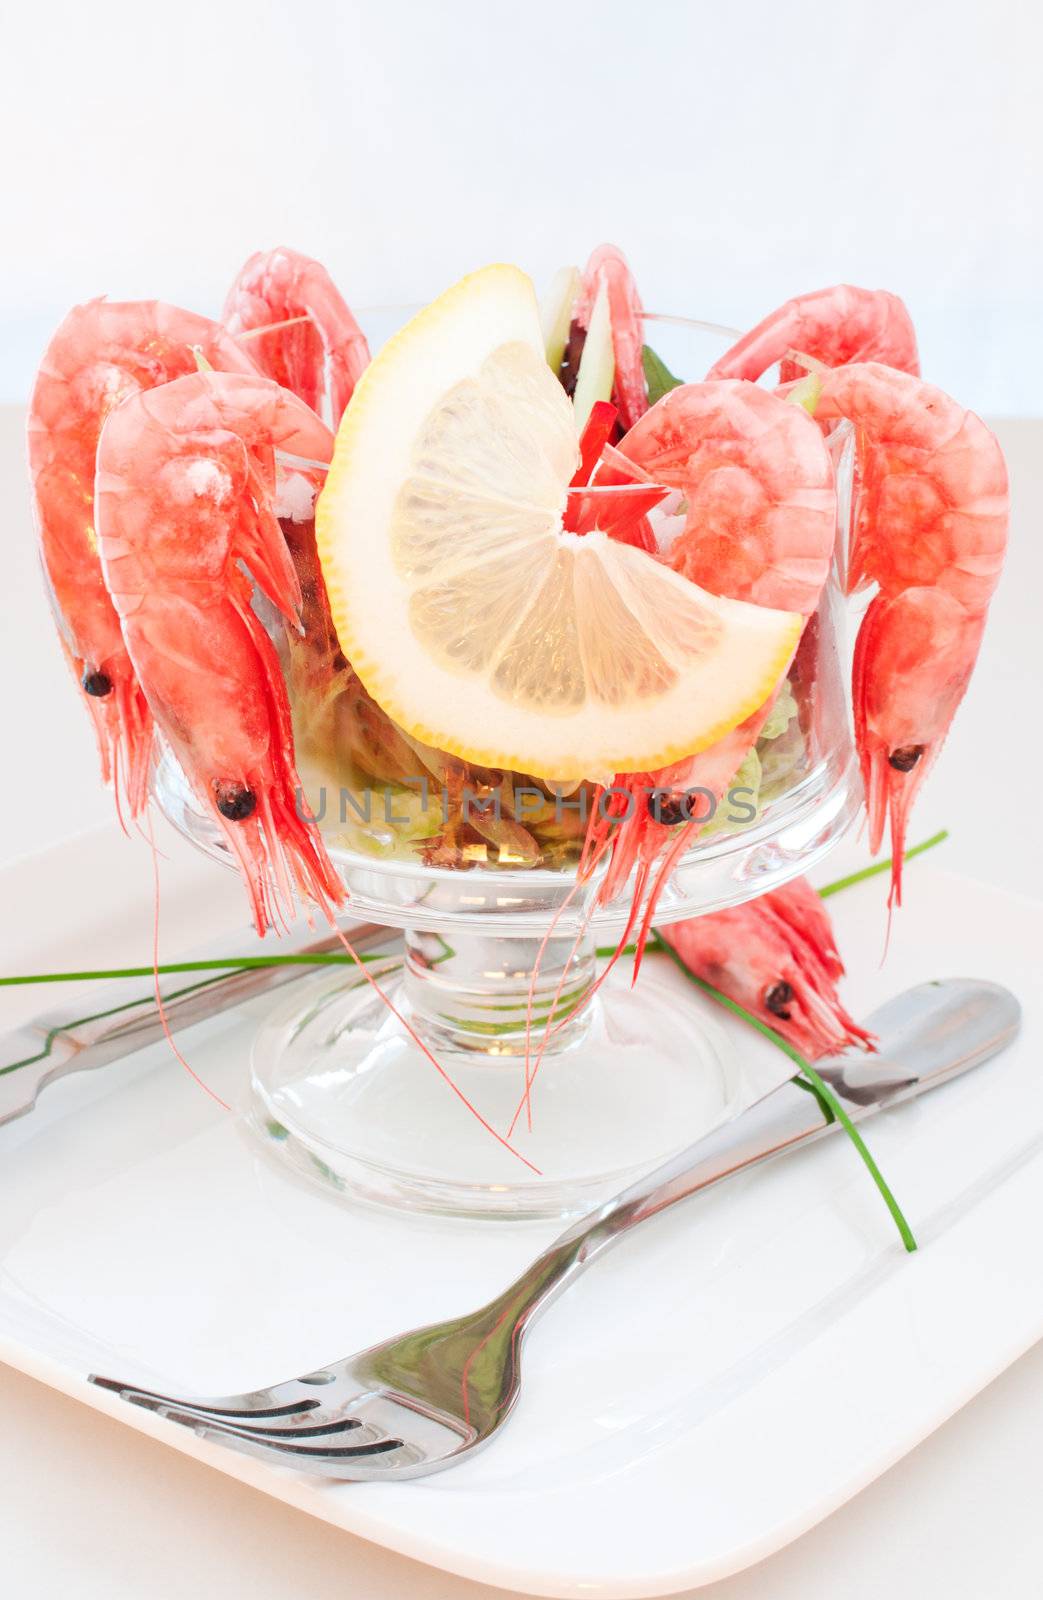 Shrimp cocktail with lemon by Nanisimova